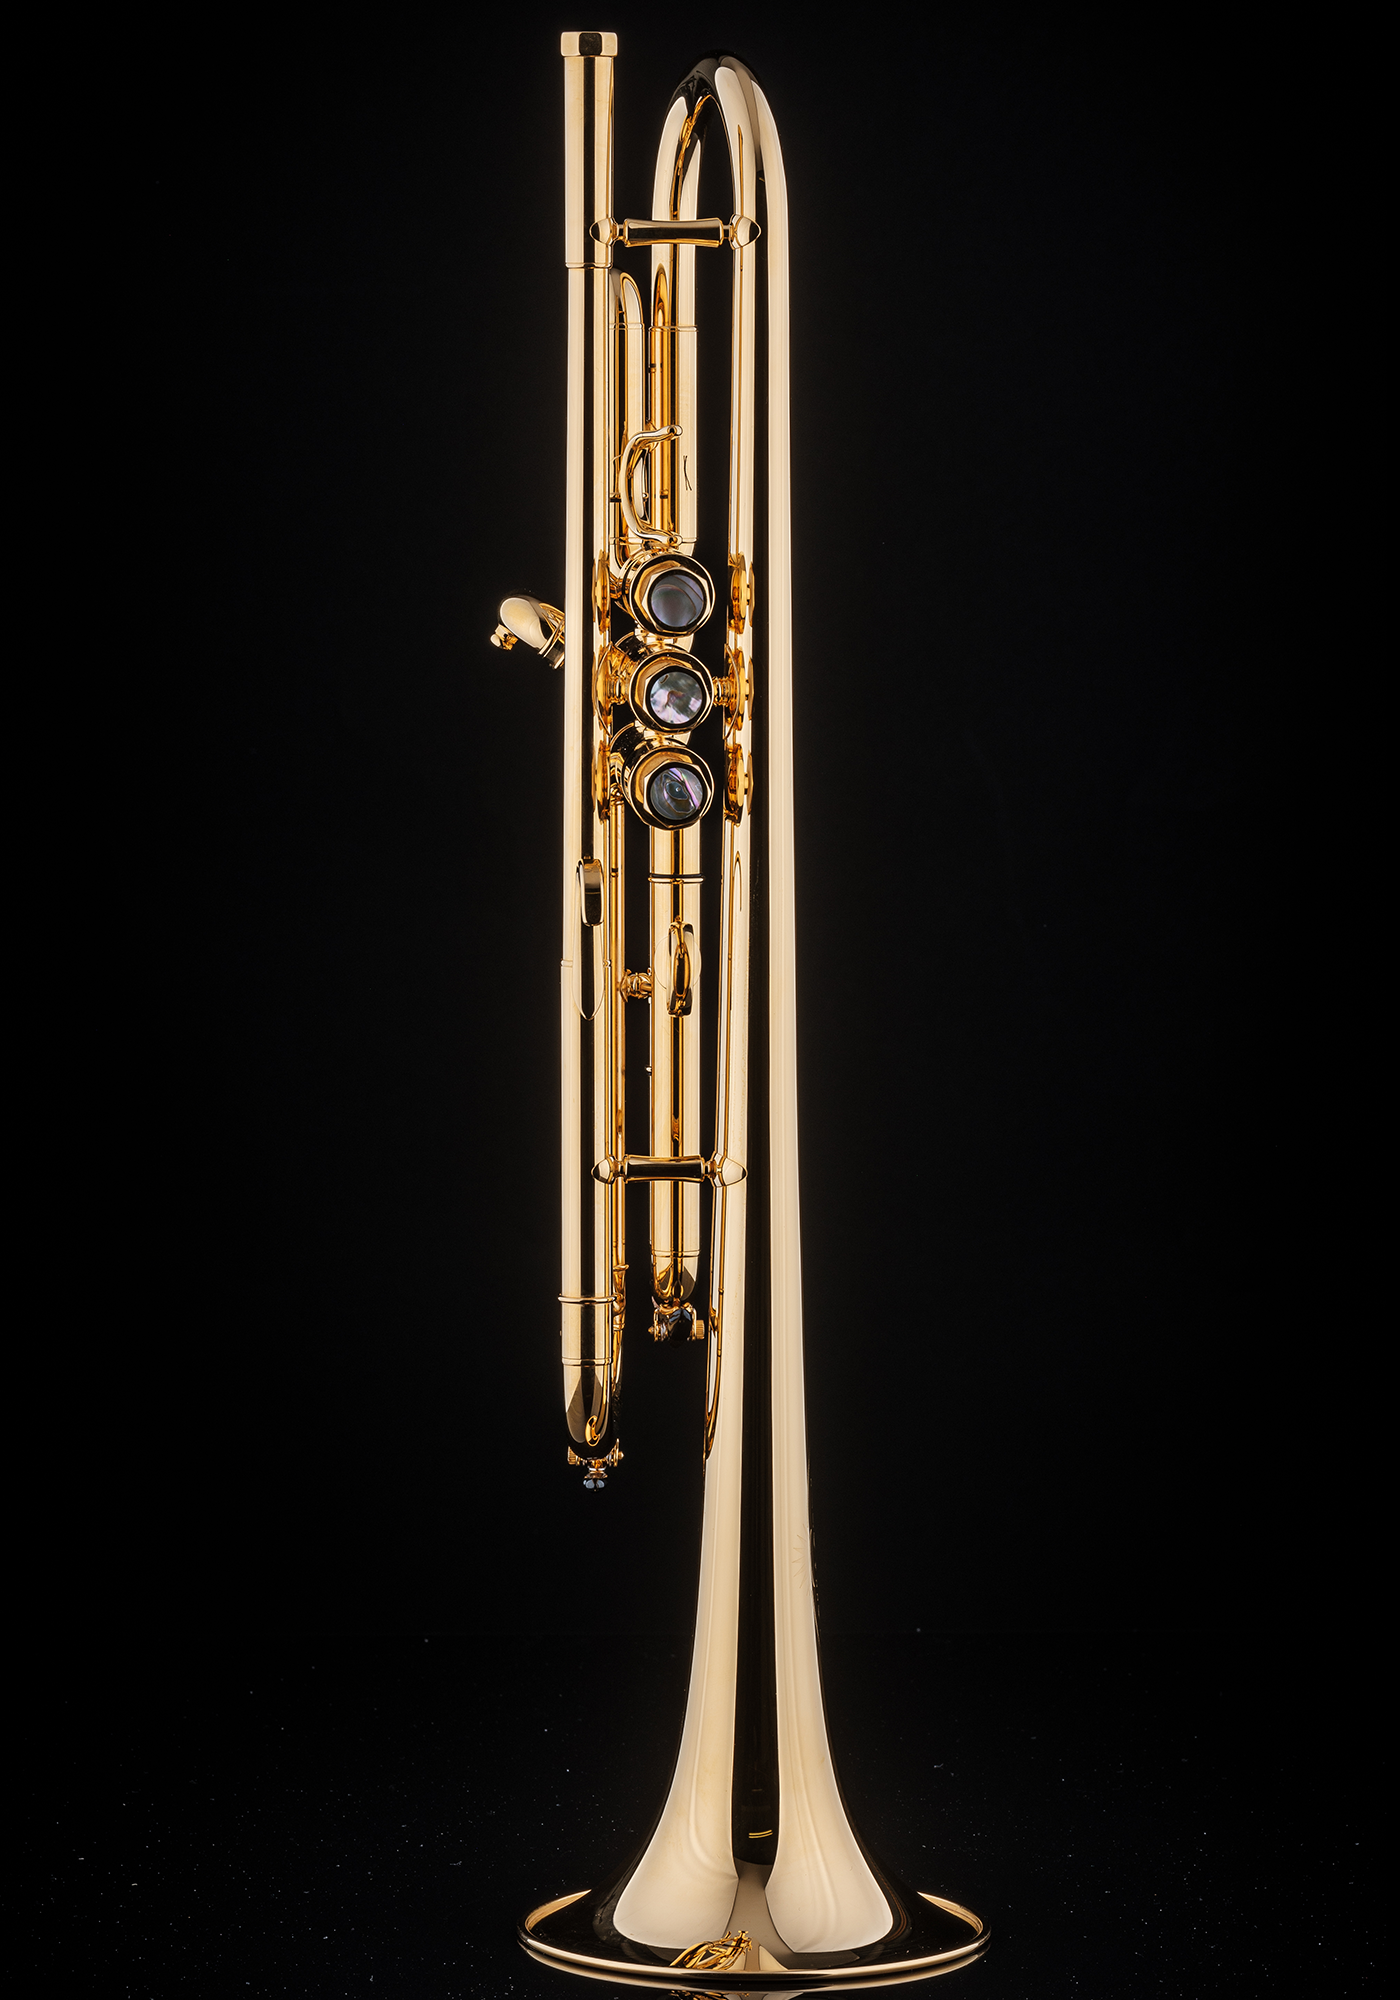 Schagerl B-Trumpet "JAMES MORRISON" gold plated